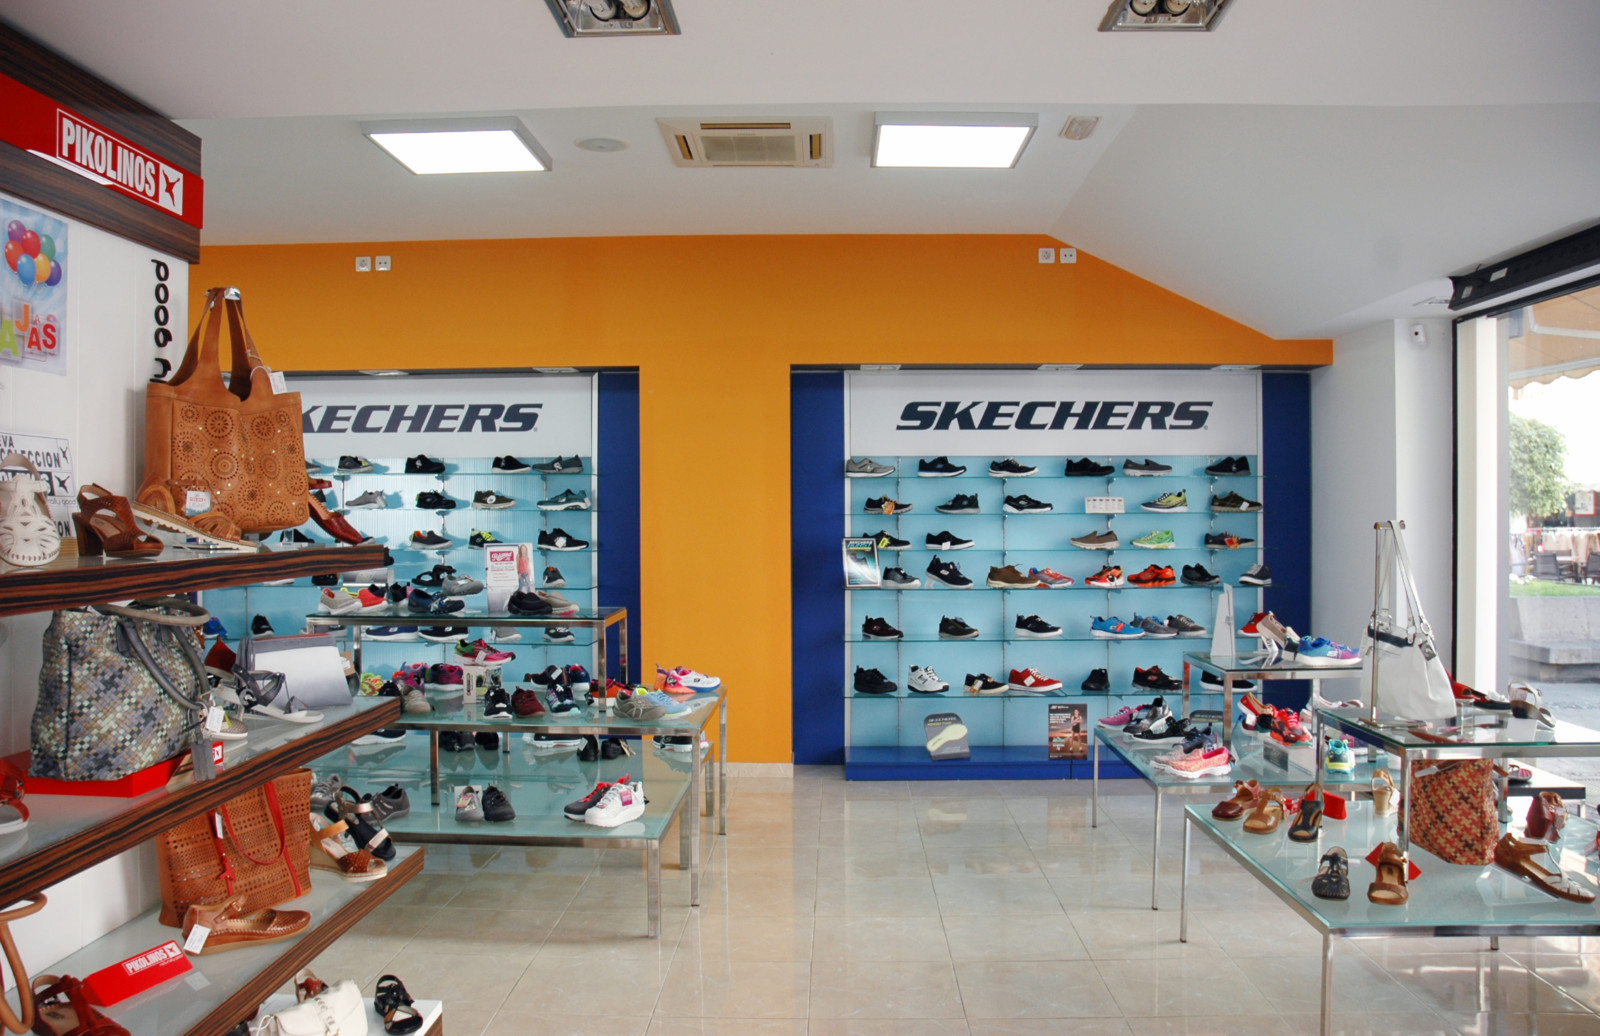 Tienda Skechers Santa Cruz De Tenerife, Now, Factory Sale, 54% OFF, www.chocomuseo.com